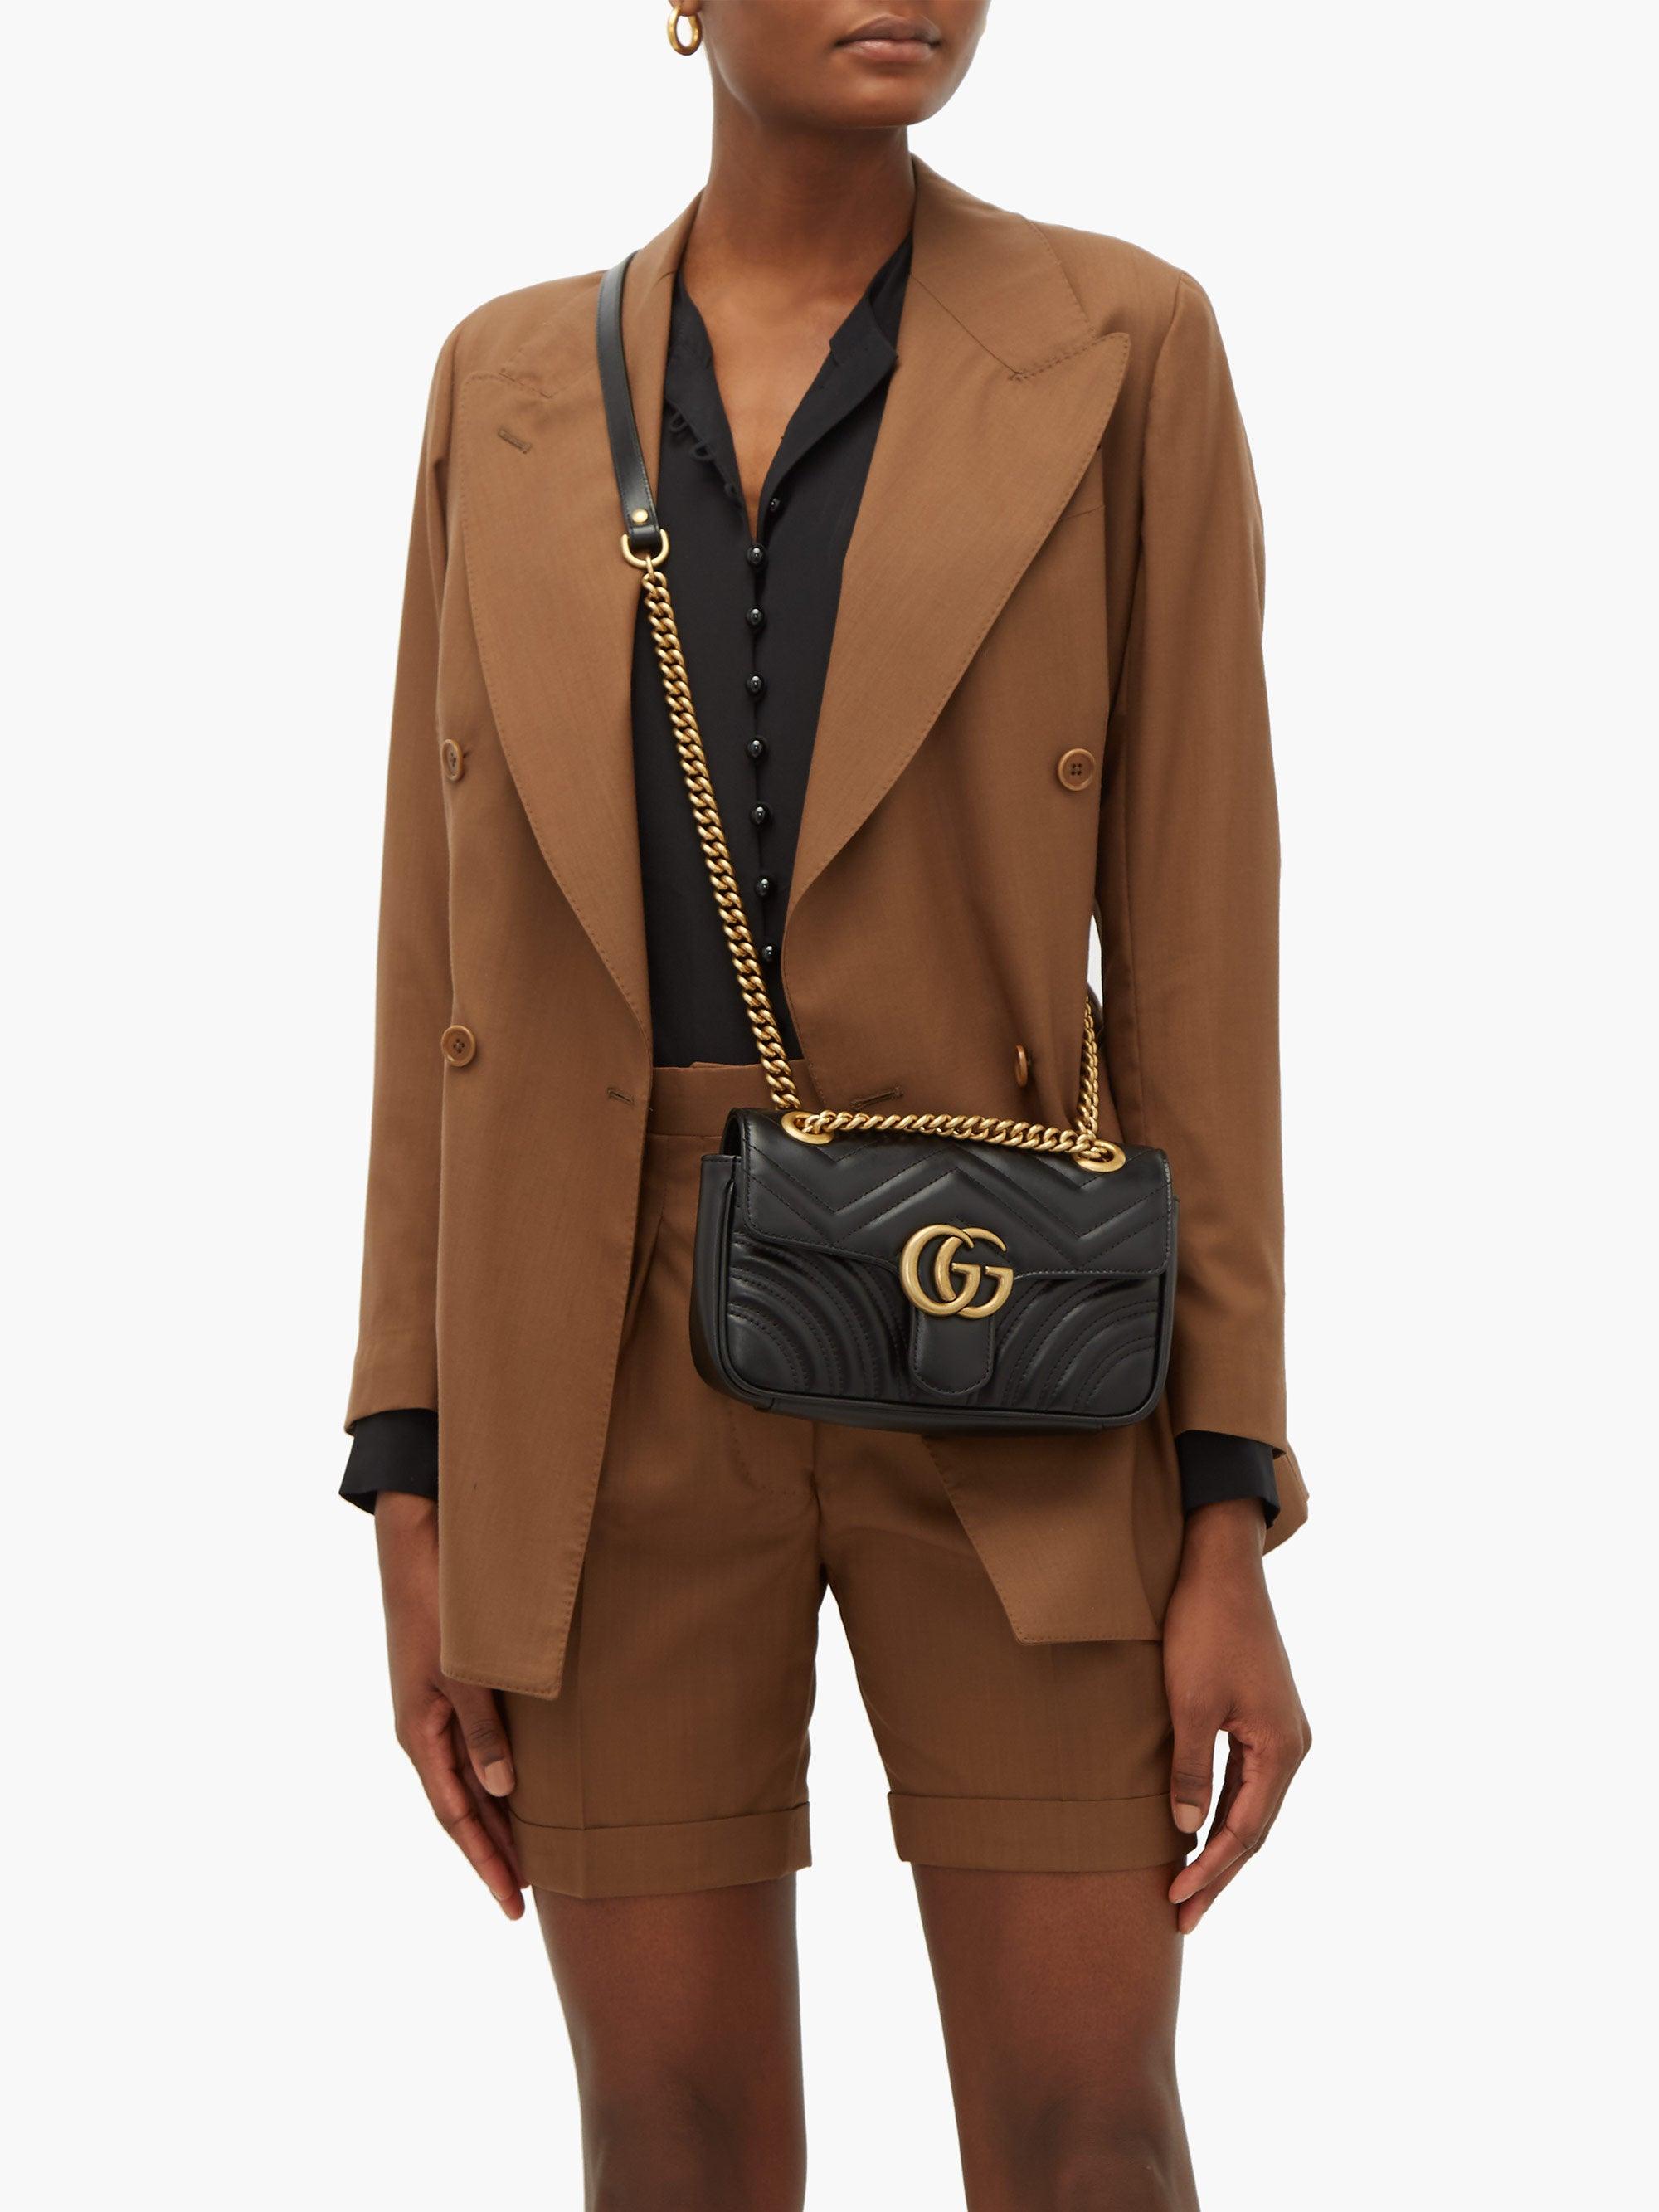 Gucci GG Marmont Mini Leather Cross-body Bag in Black Save -